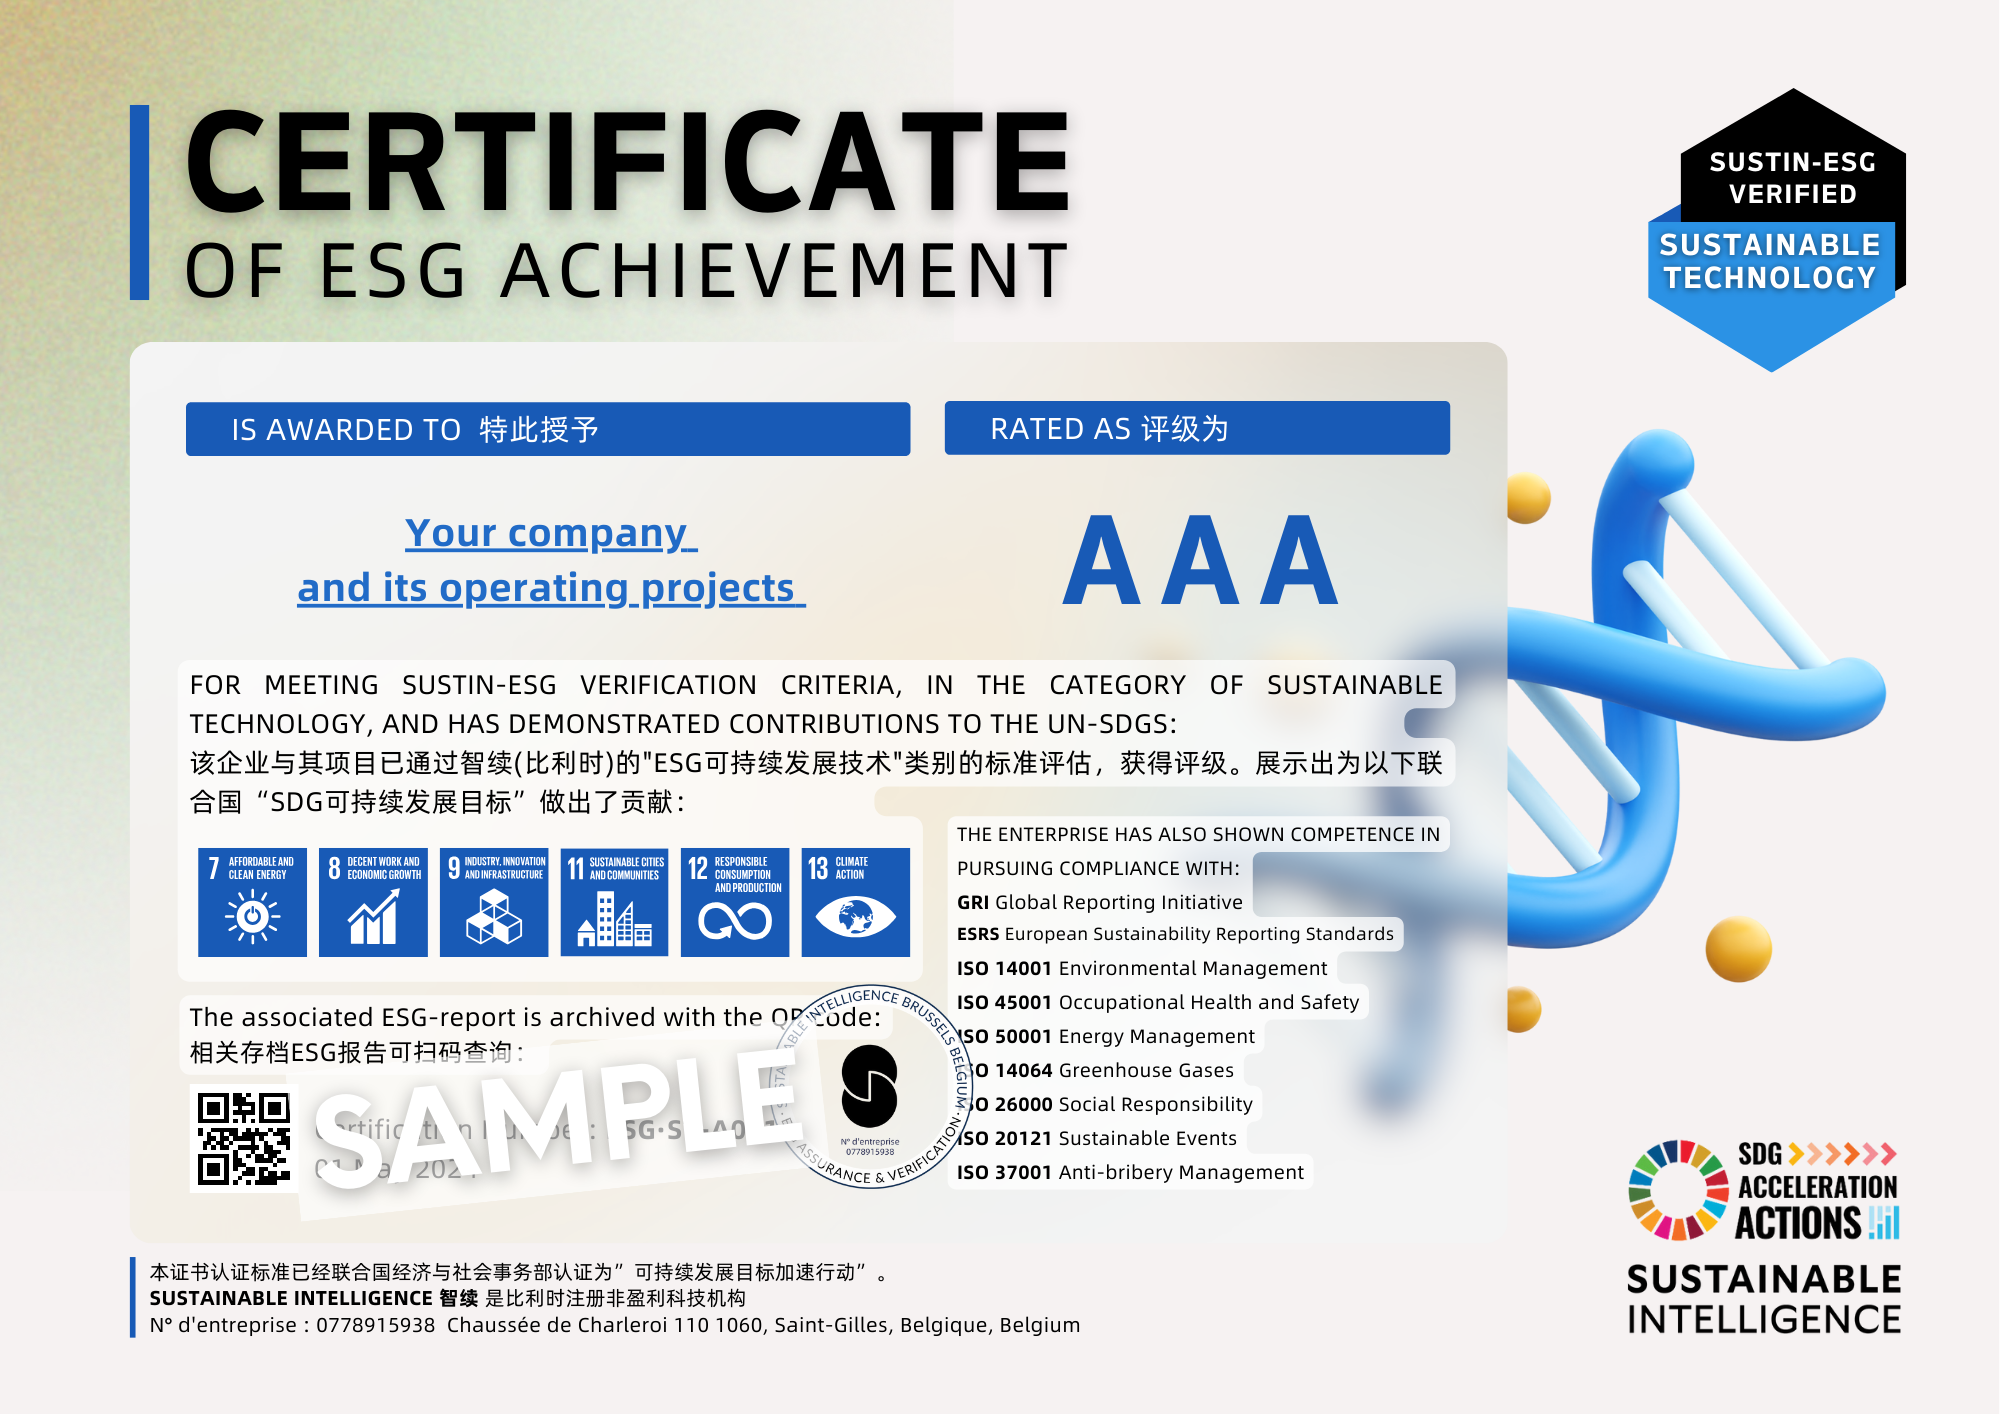 Sample Certificate of Verification